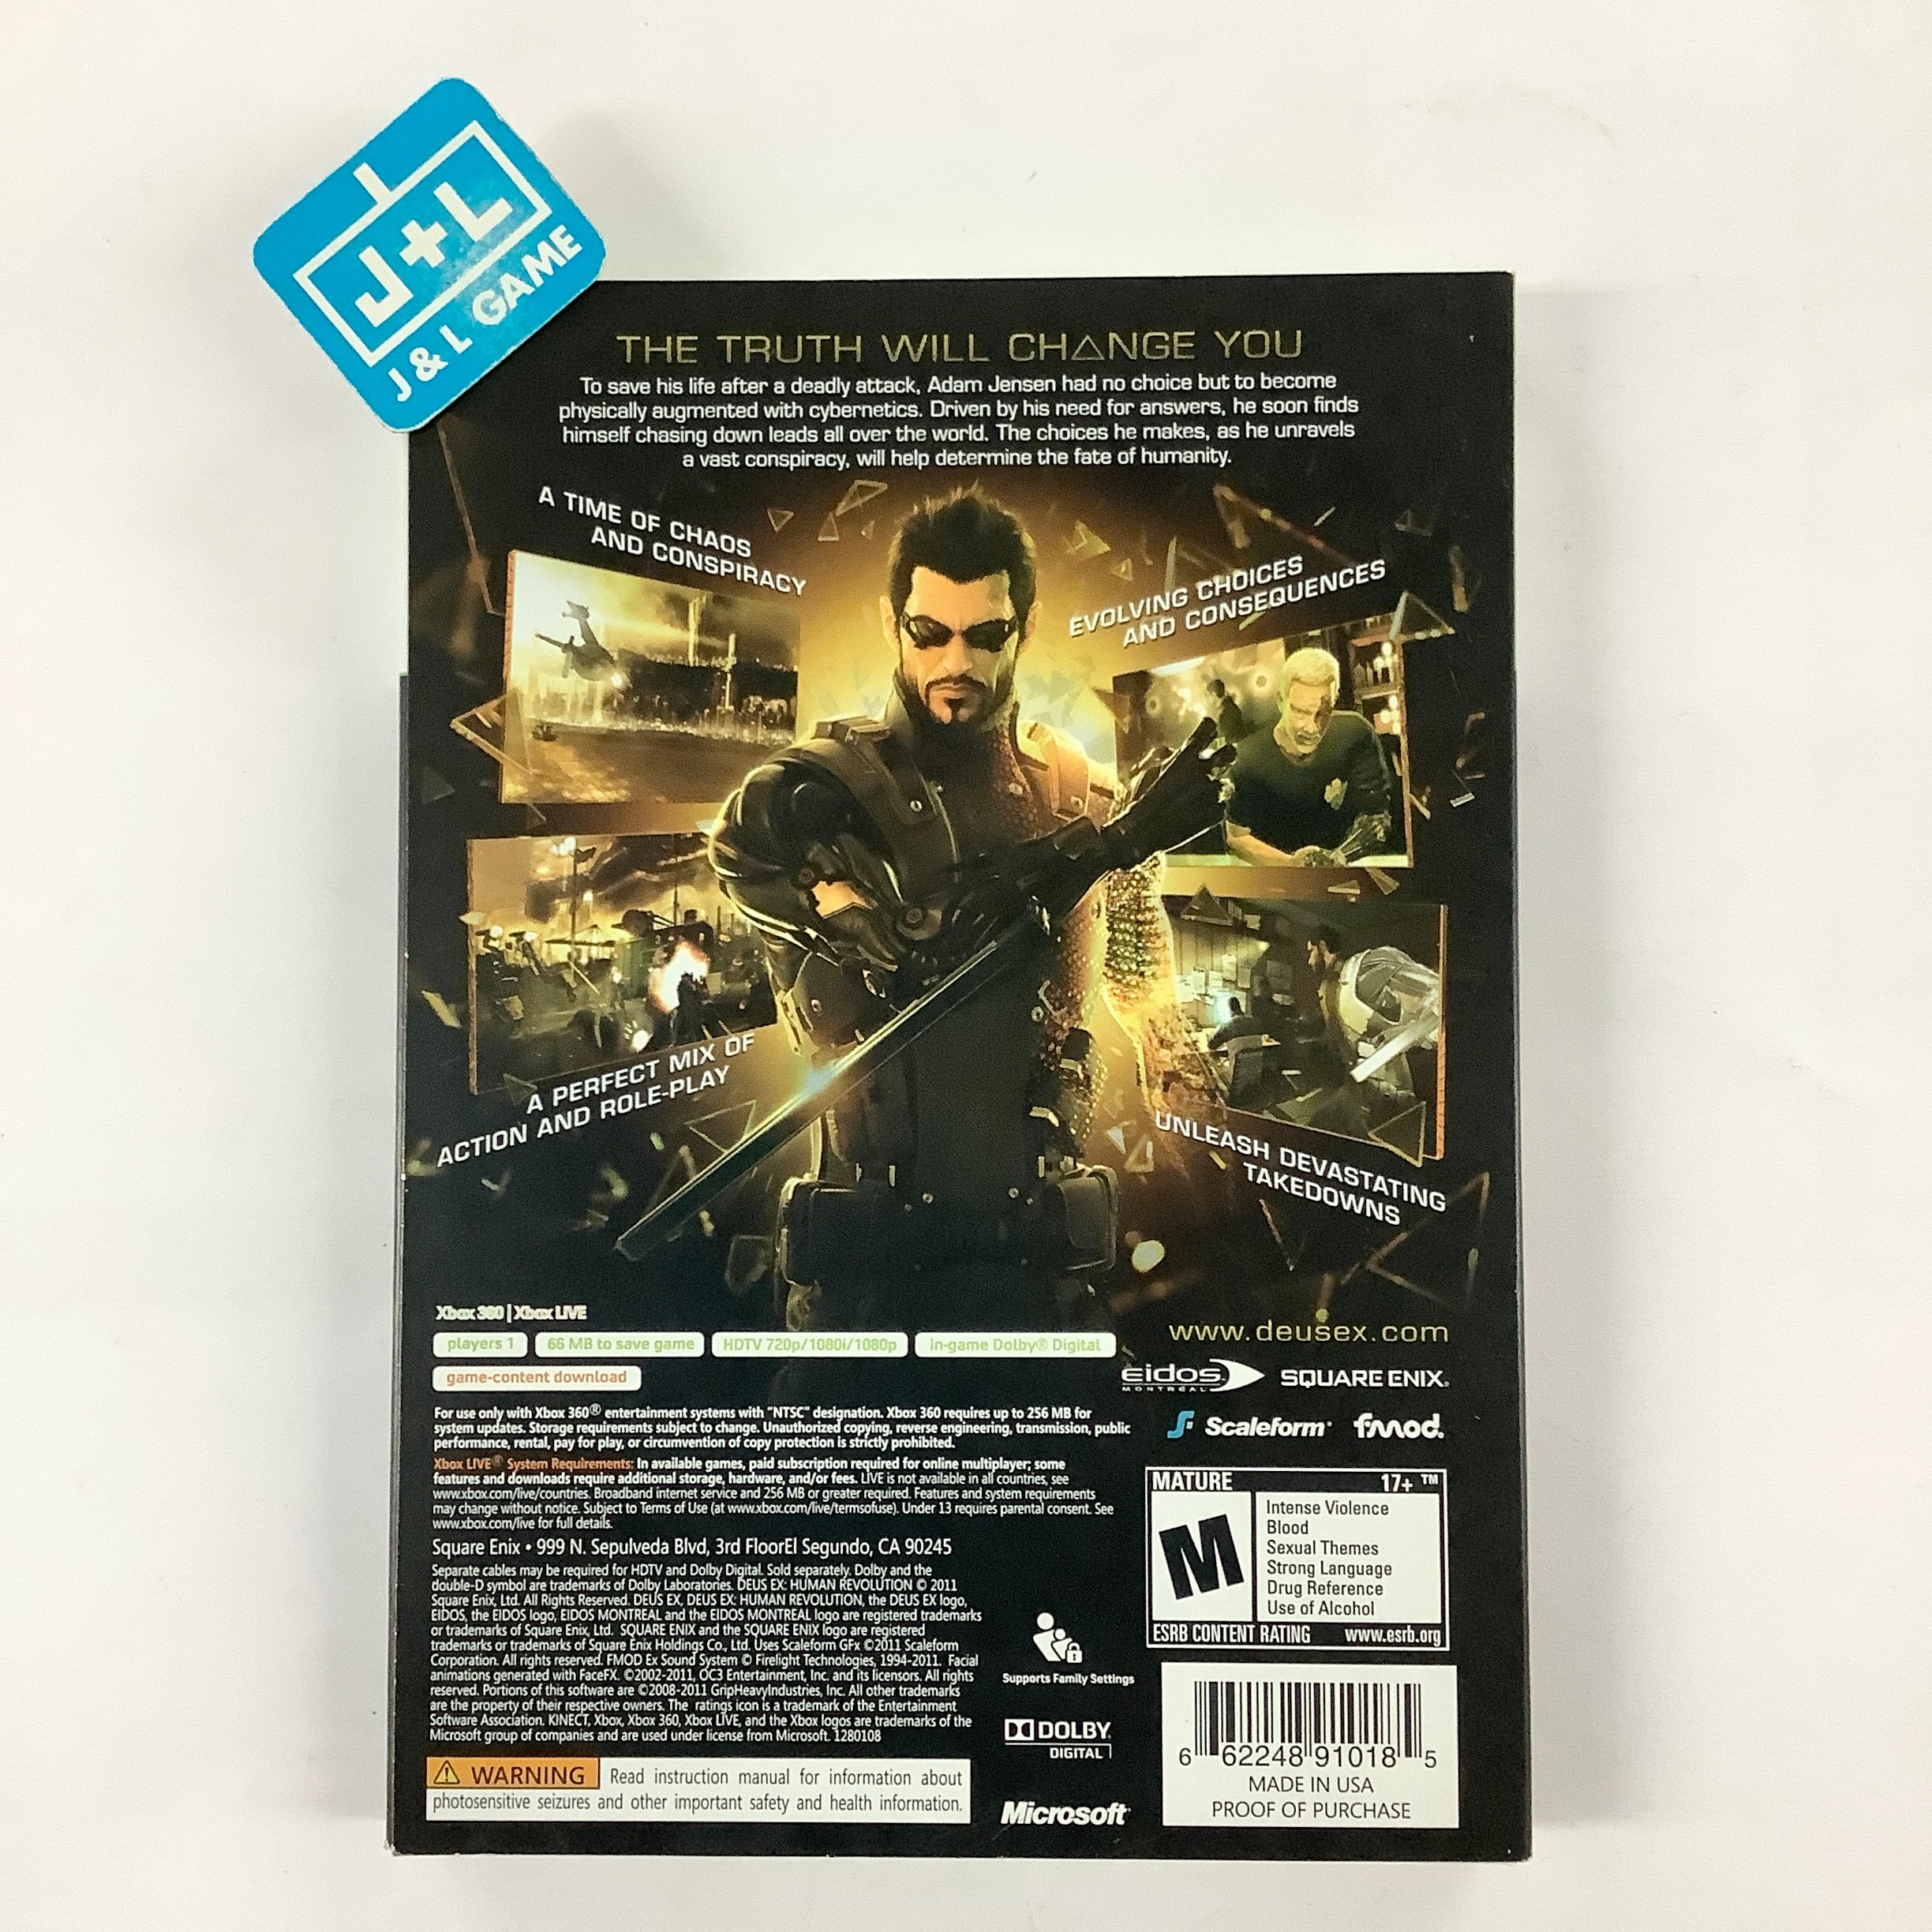 Deus Ex: Human Revolution - Xbox 360 Video Games Square Enix   